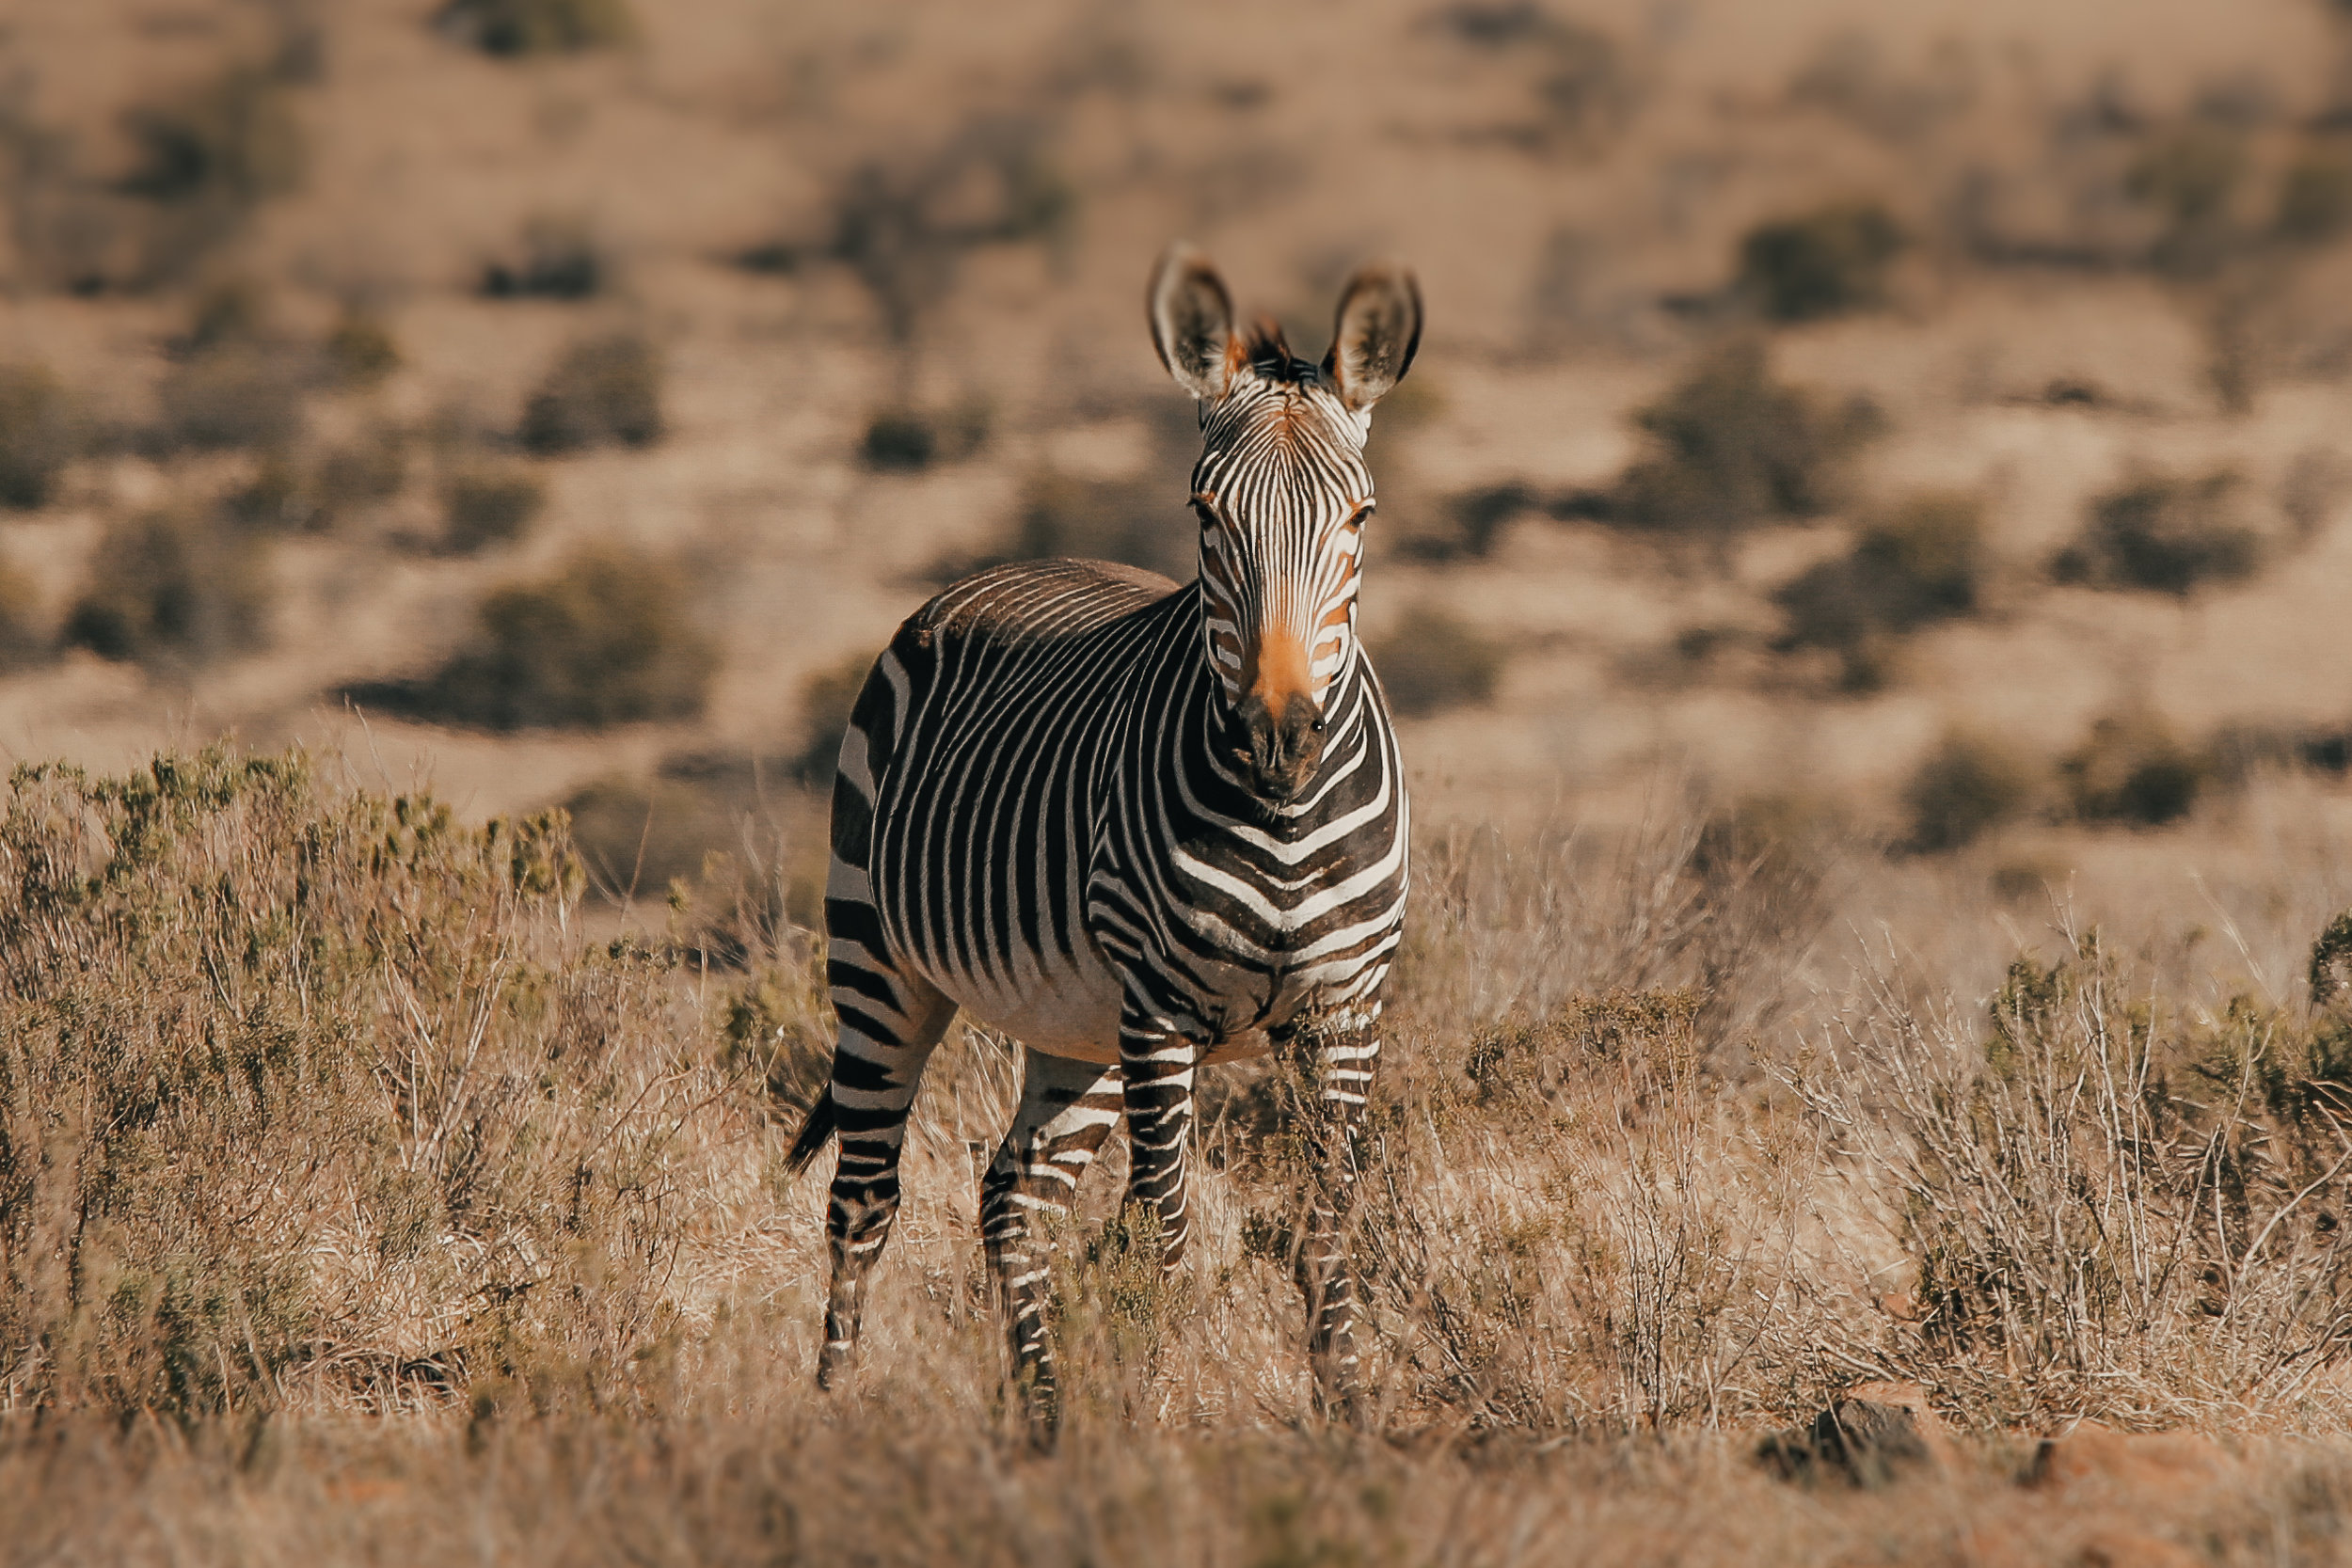  Mountain Zebra National Park, South Africa